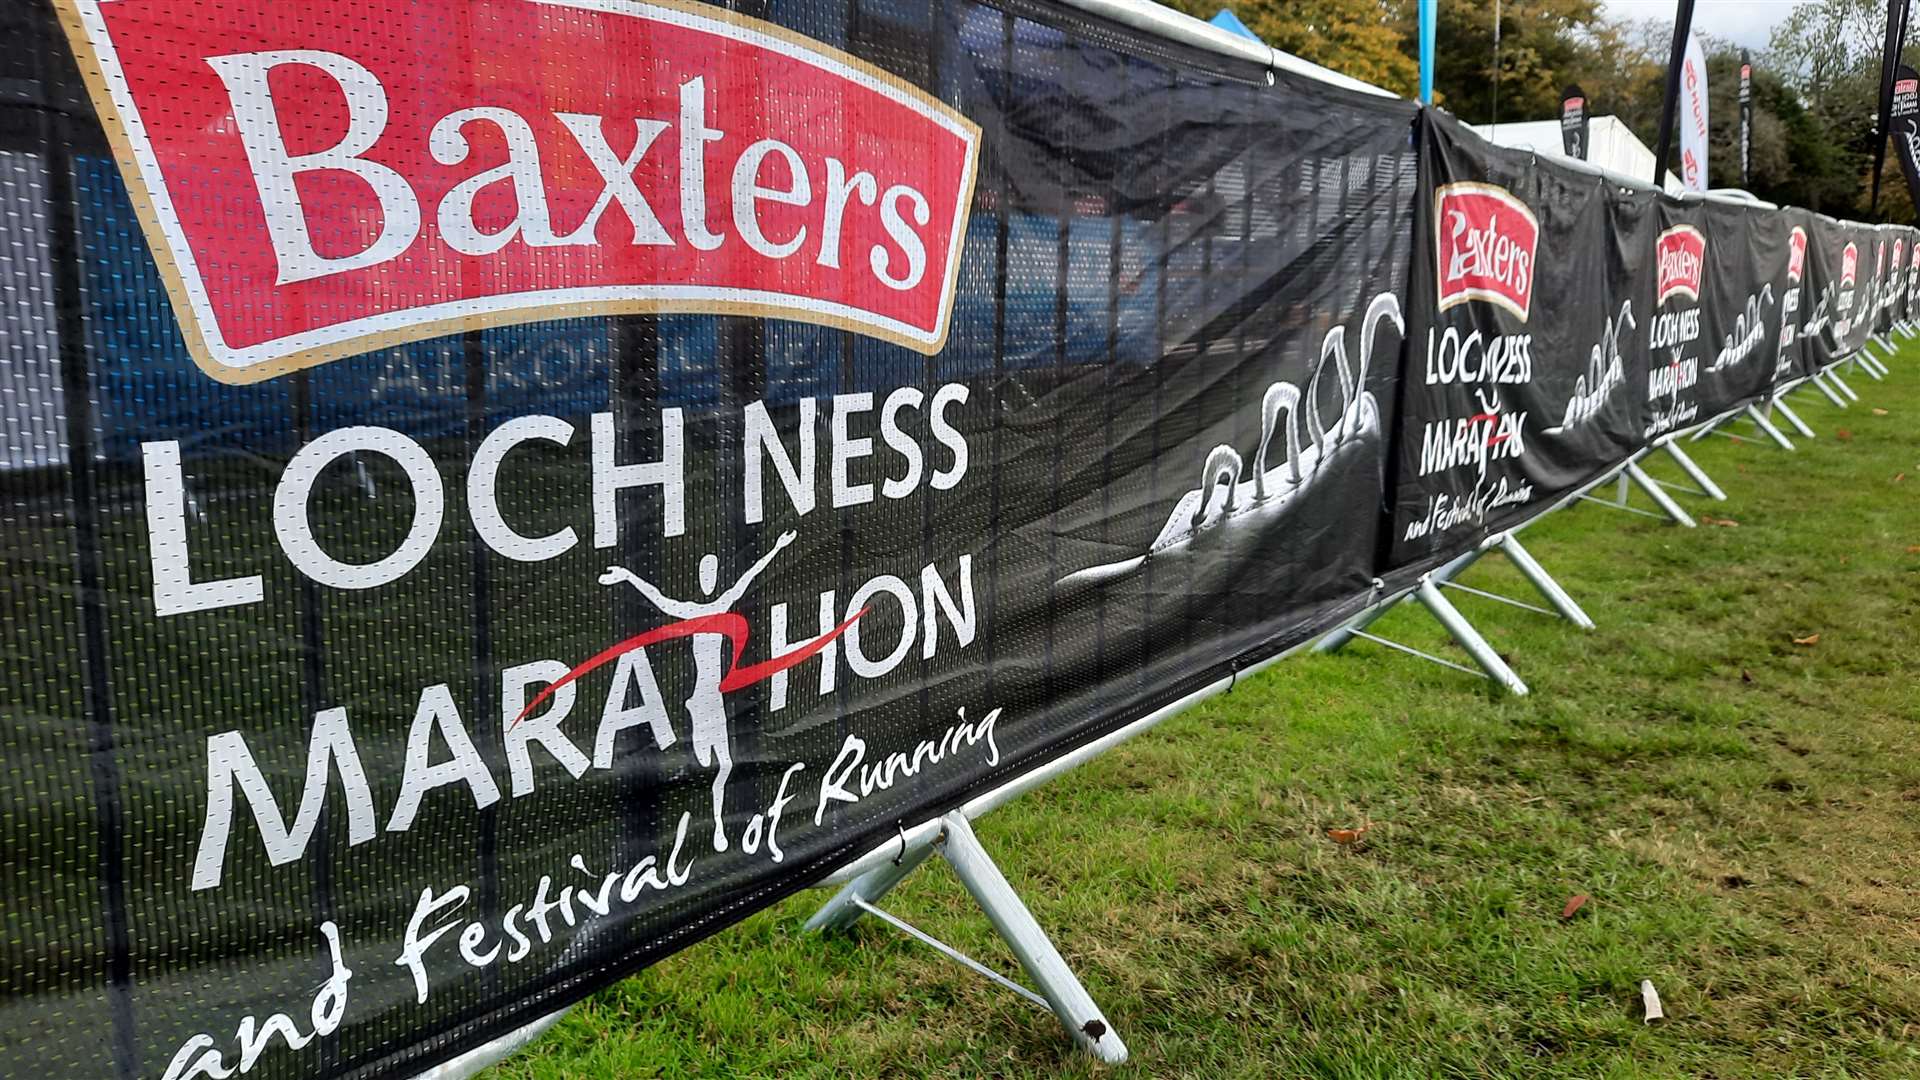 Baxters Loch Ness Marathon logo on fence.